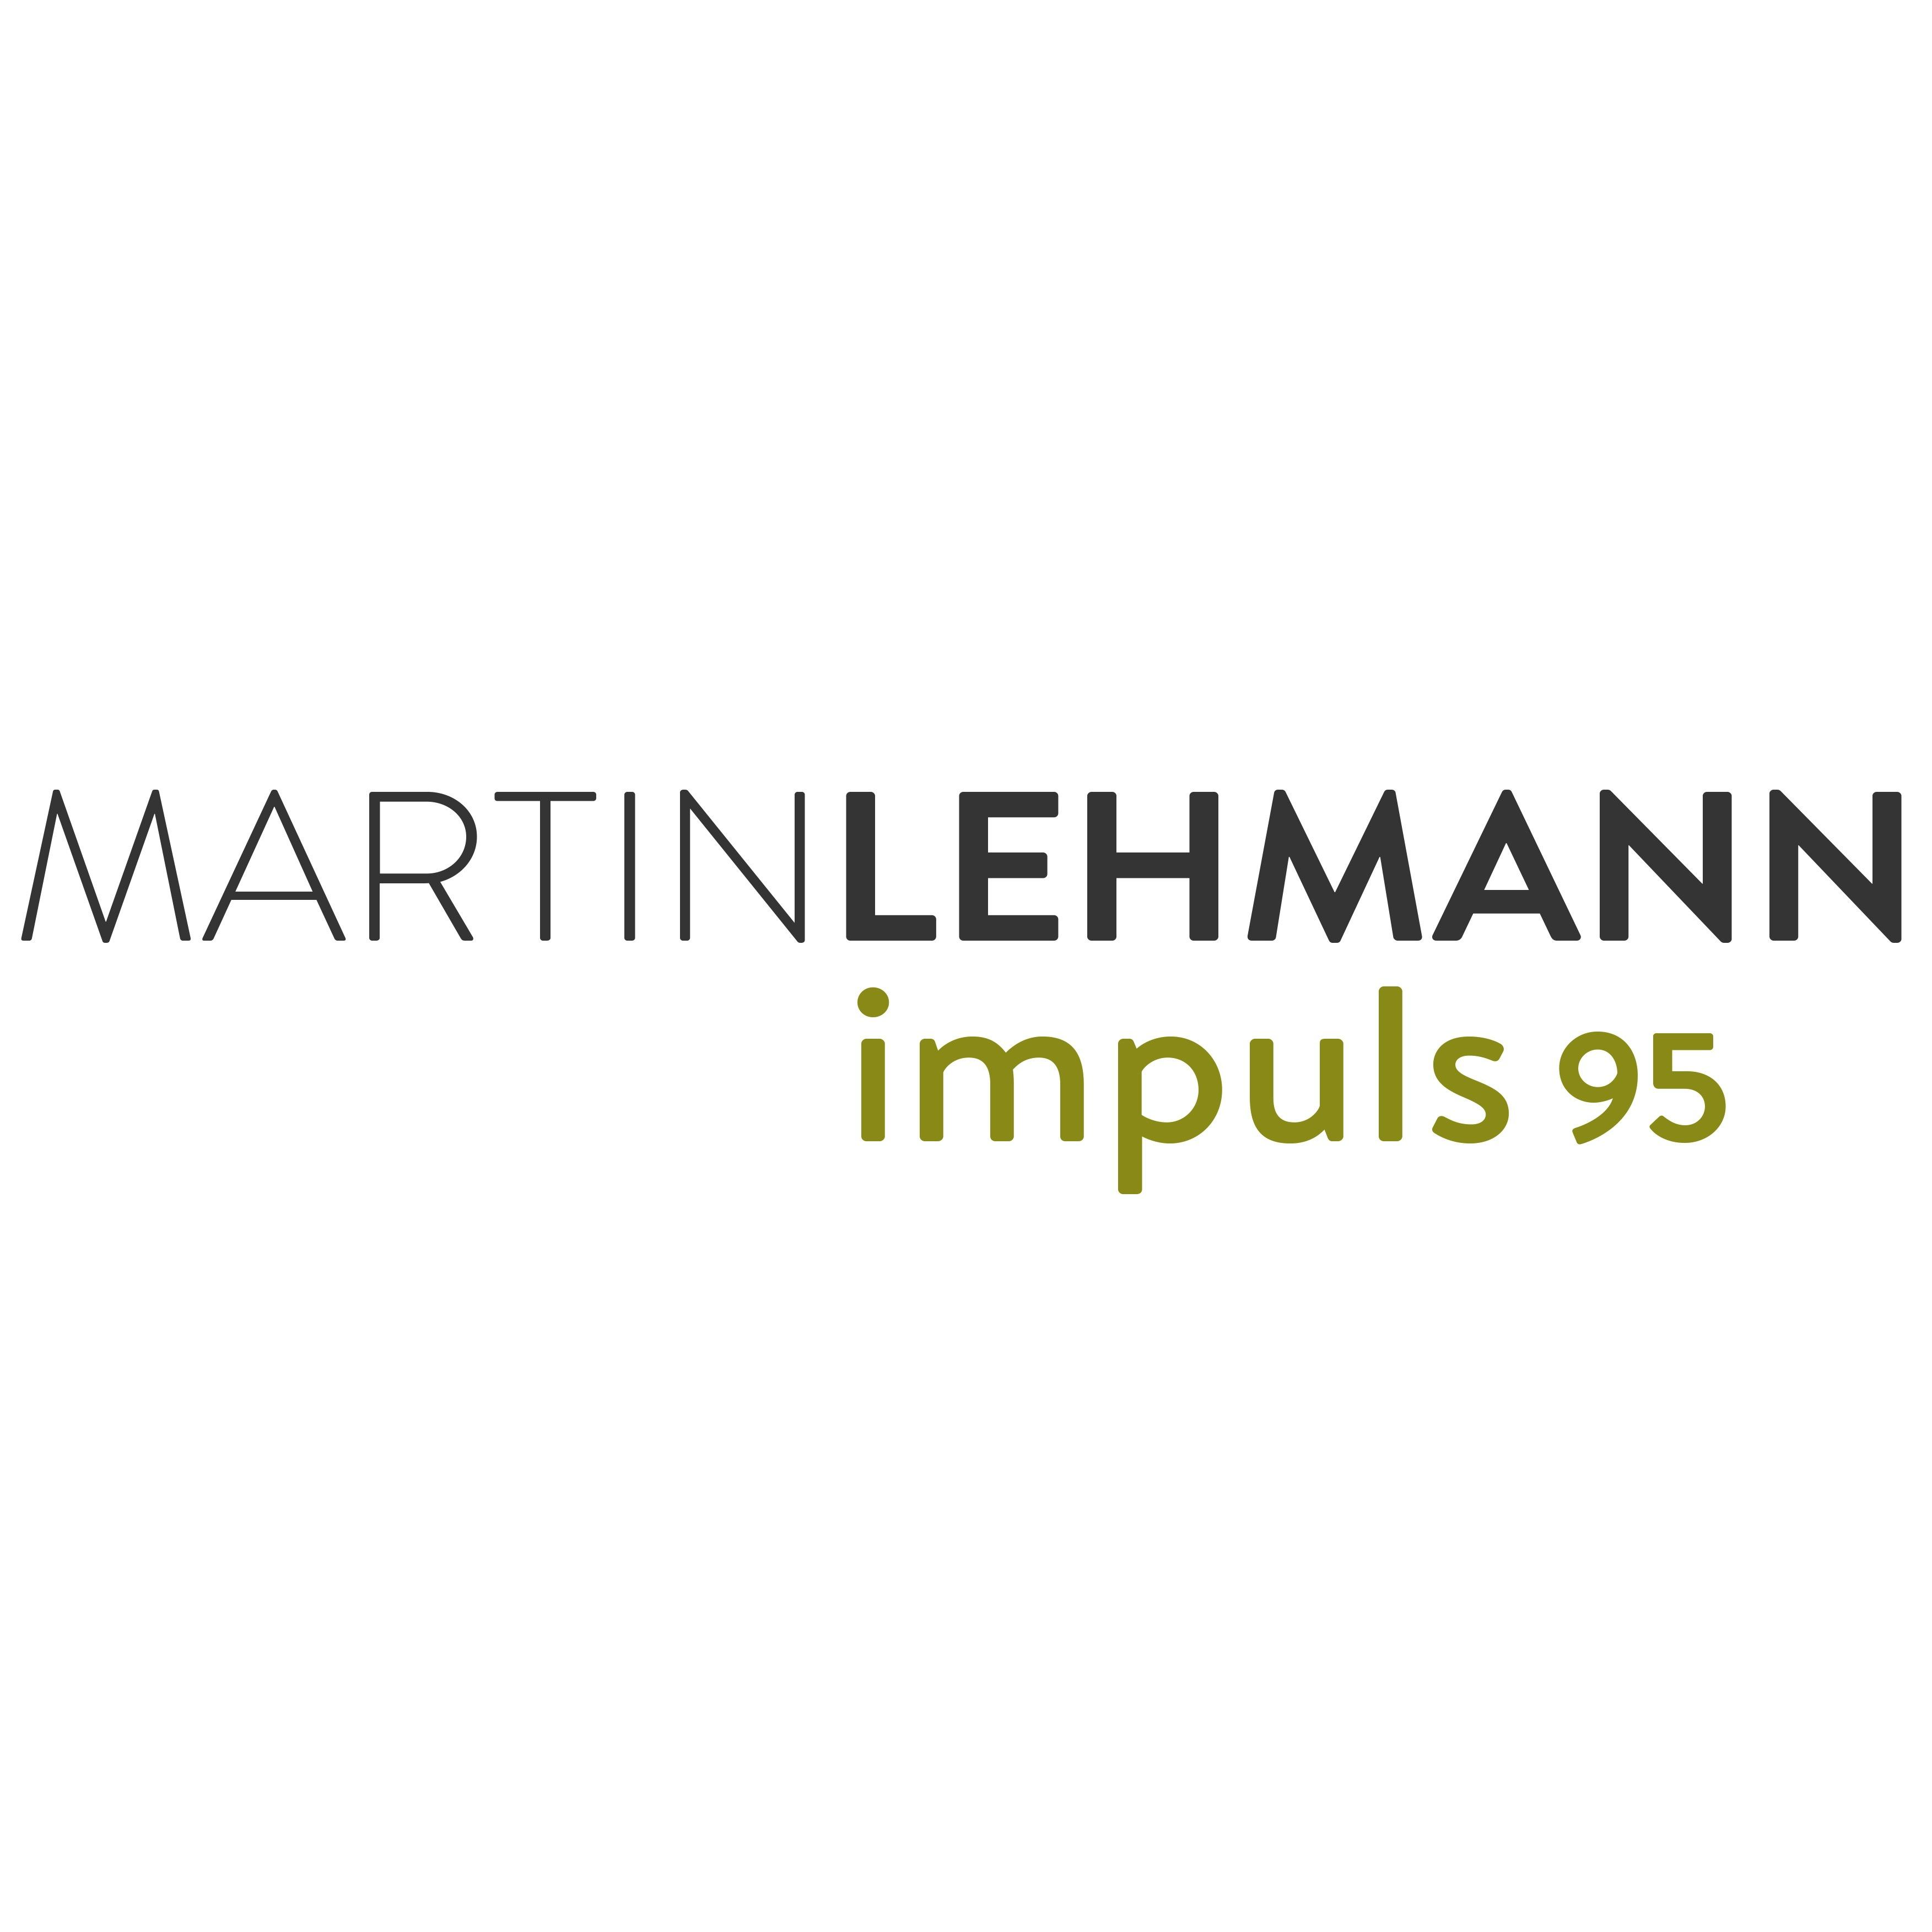 Martin Lehmann-impuls 95 in Auggen - Logo